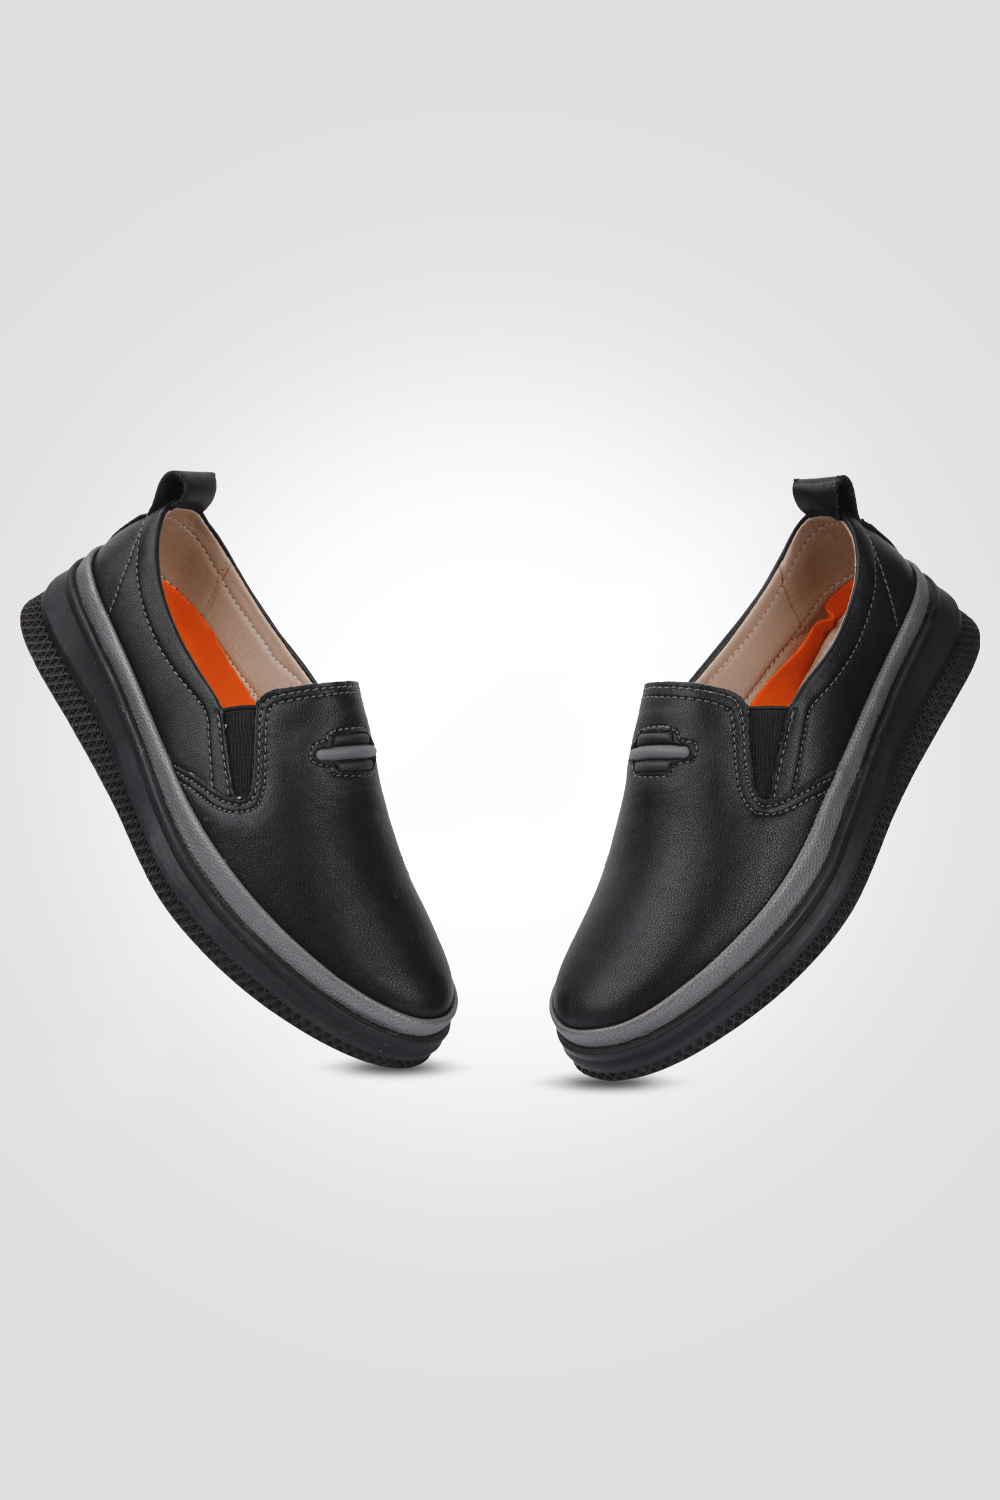 LADY COMFORT - נעל נוחות לנשים בצבע שחור - MASHBIR//365